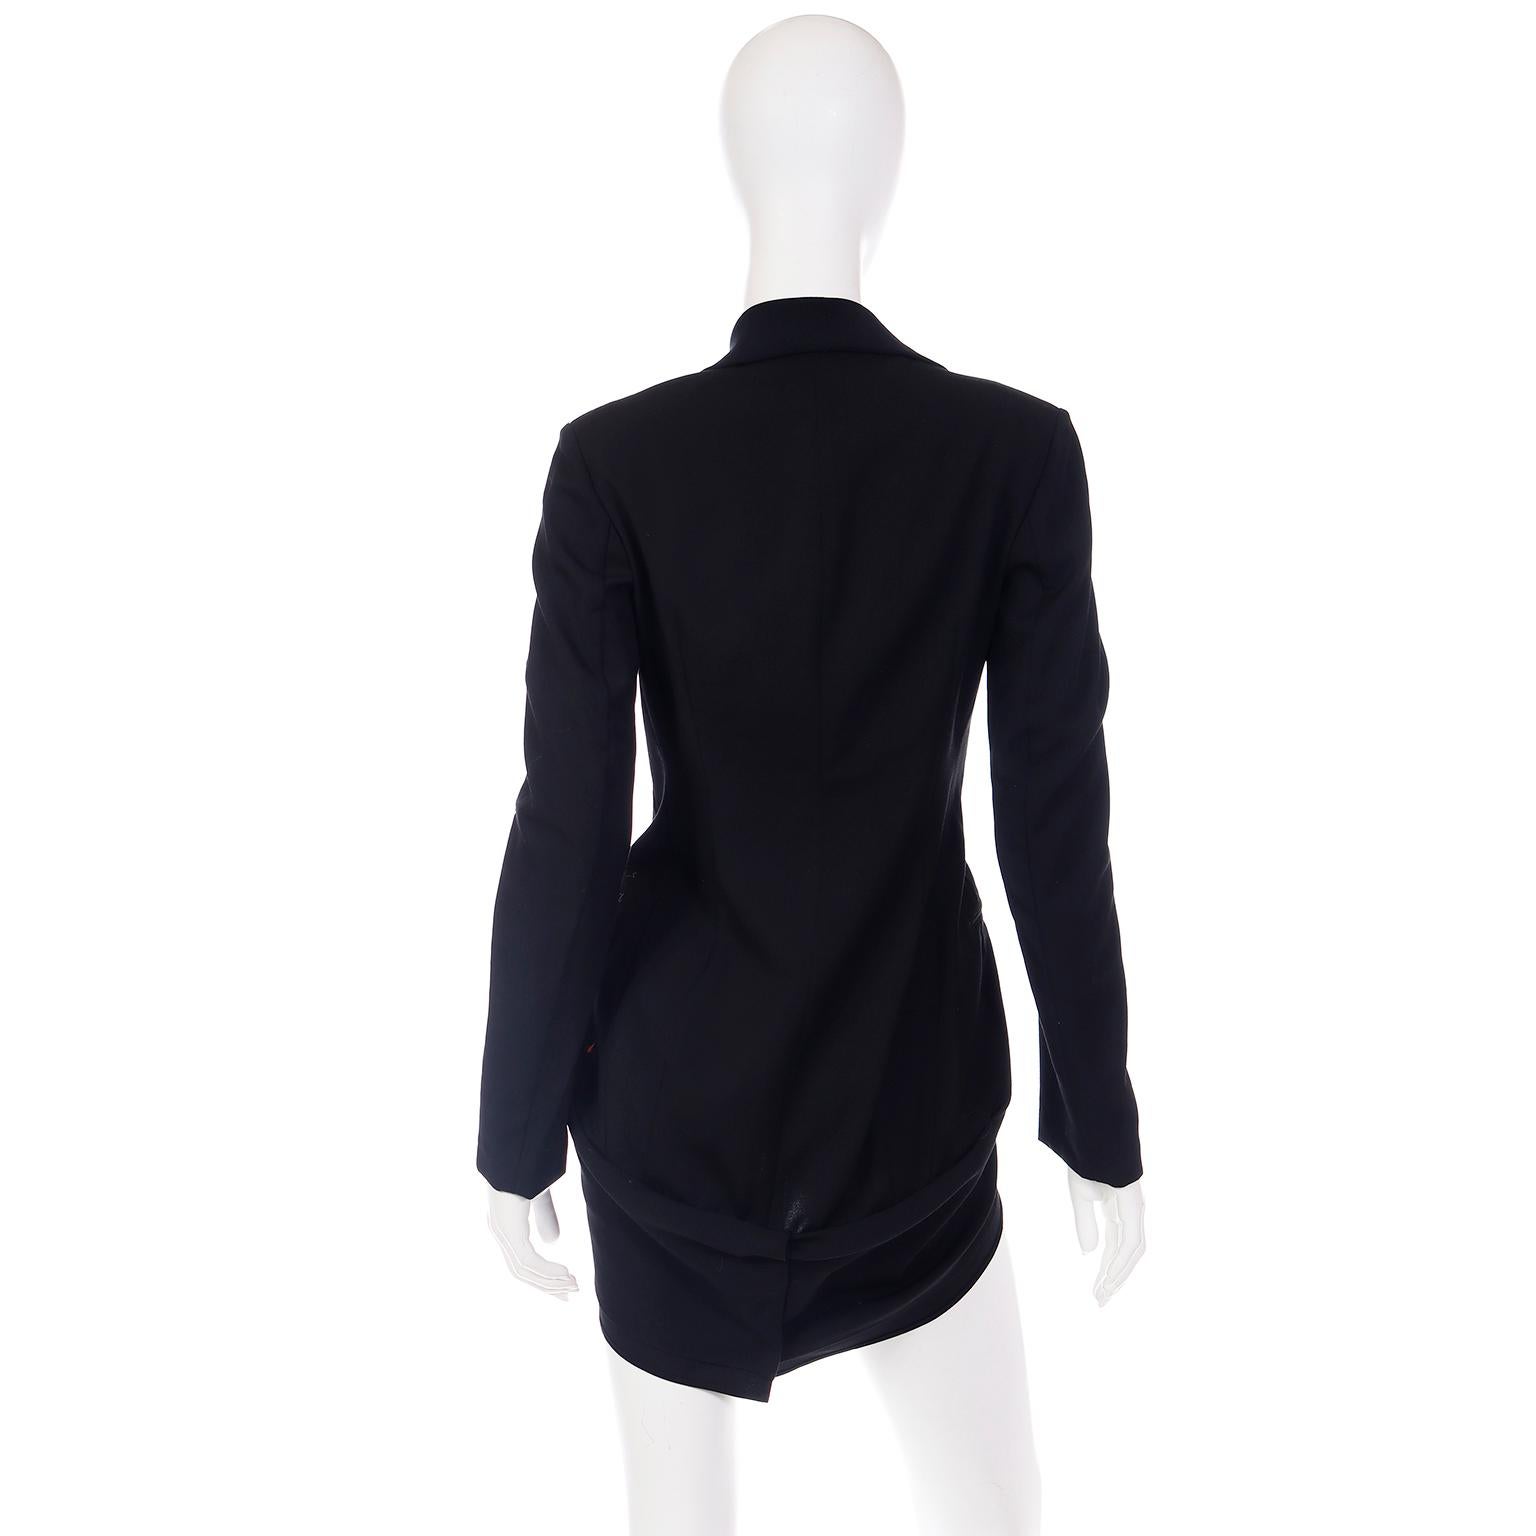 Yohji Yamamoto Black Wool Tuxedo Style Jacket W Zipper Button Holes & Pockets In Good Condition For Sale In Portland, OR